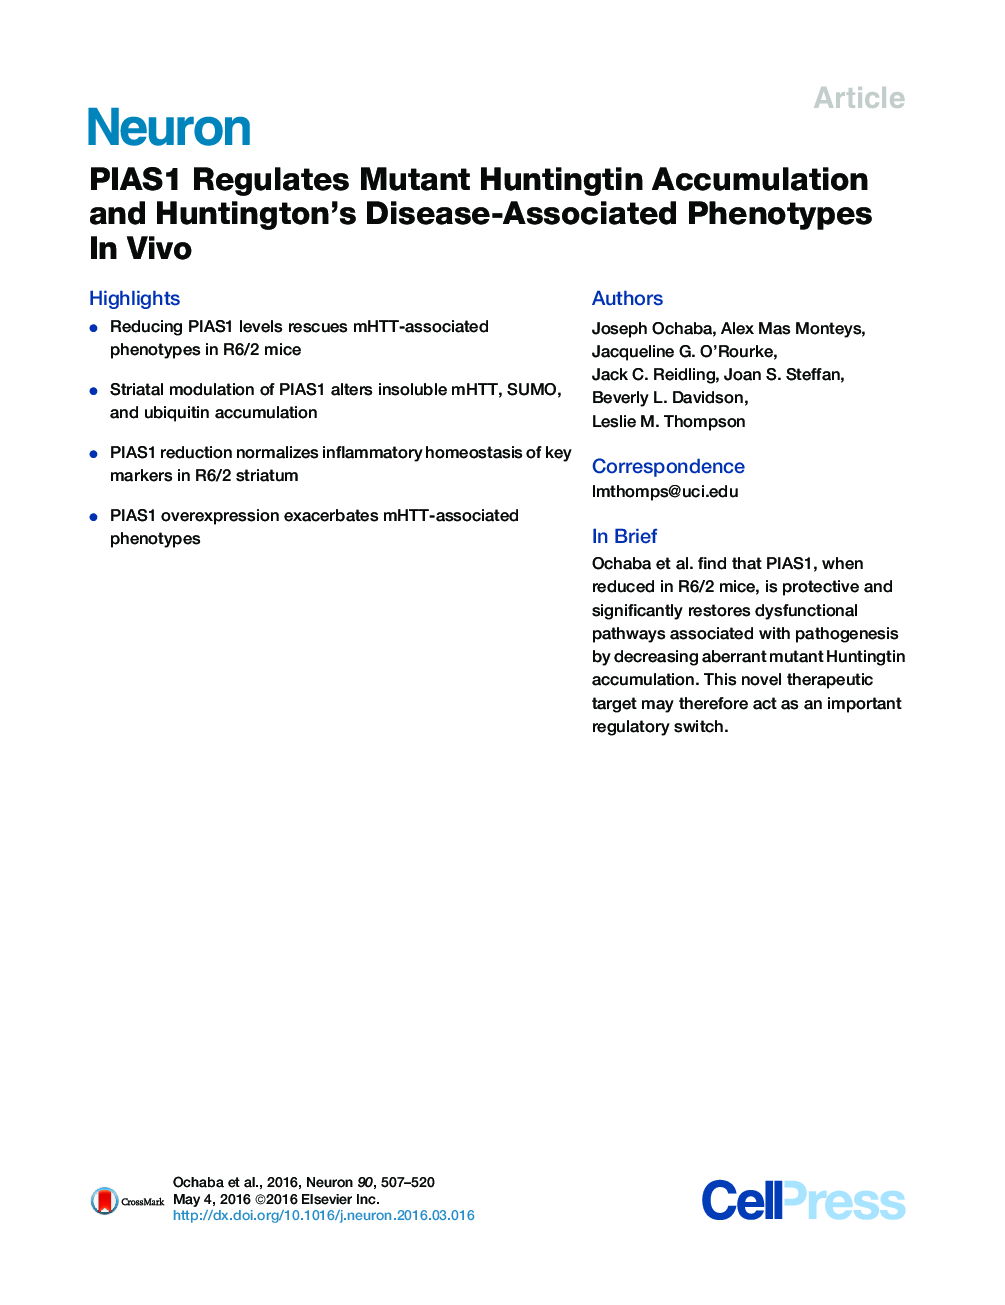 PIAS1 Regulates Mutant Huntingtin Accumulation and Huntington’s Disease-Associated Phenotypes In Vivo